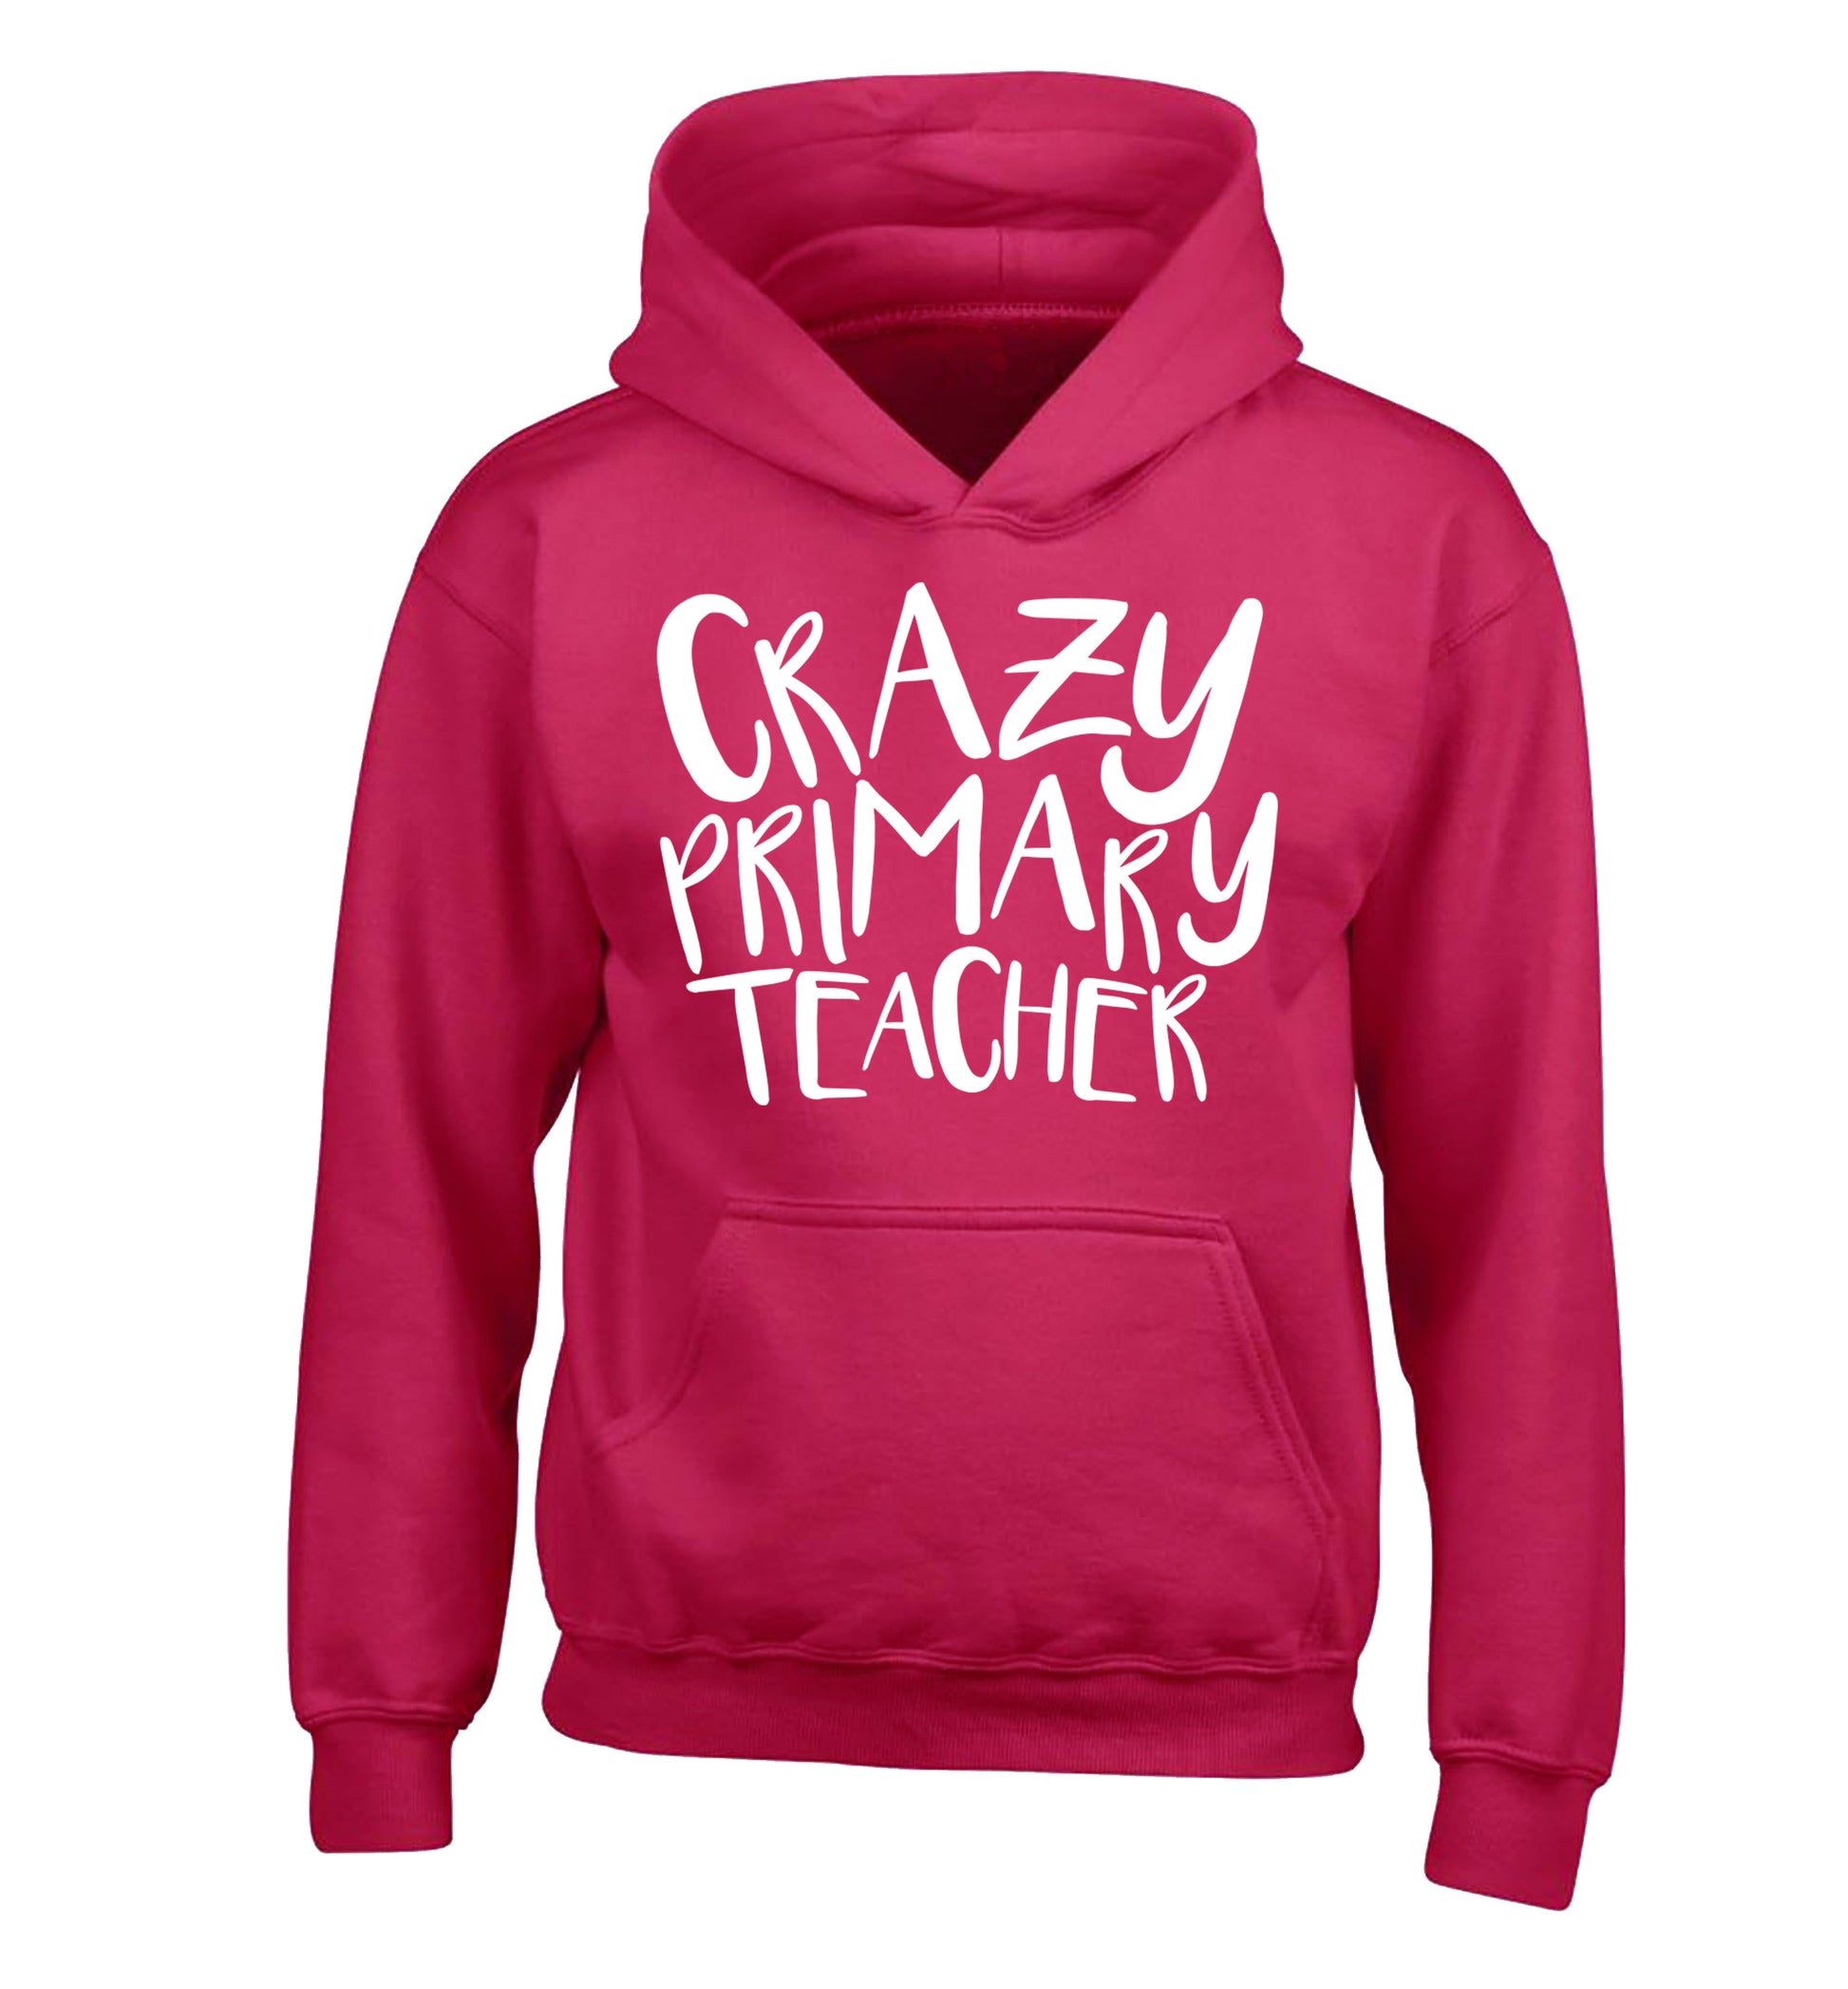 Crazy primary teacher children's pink hoodie 12-13 Years